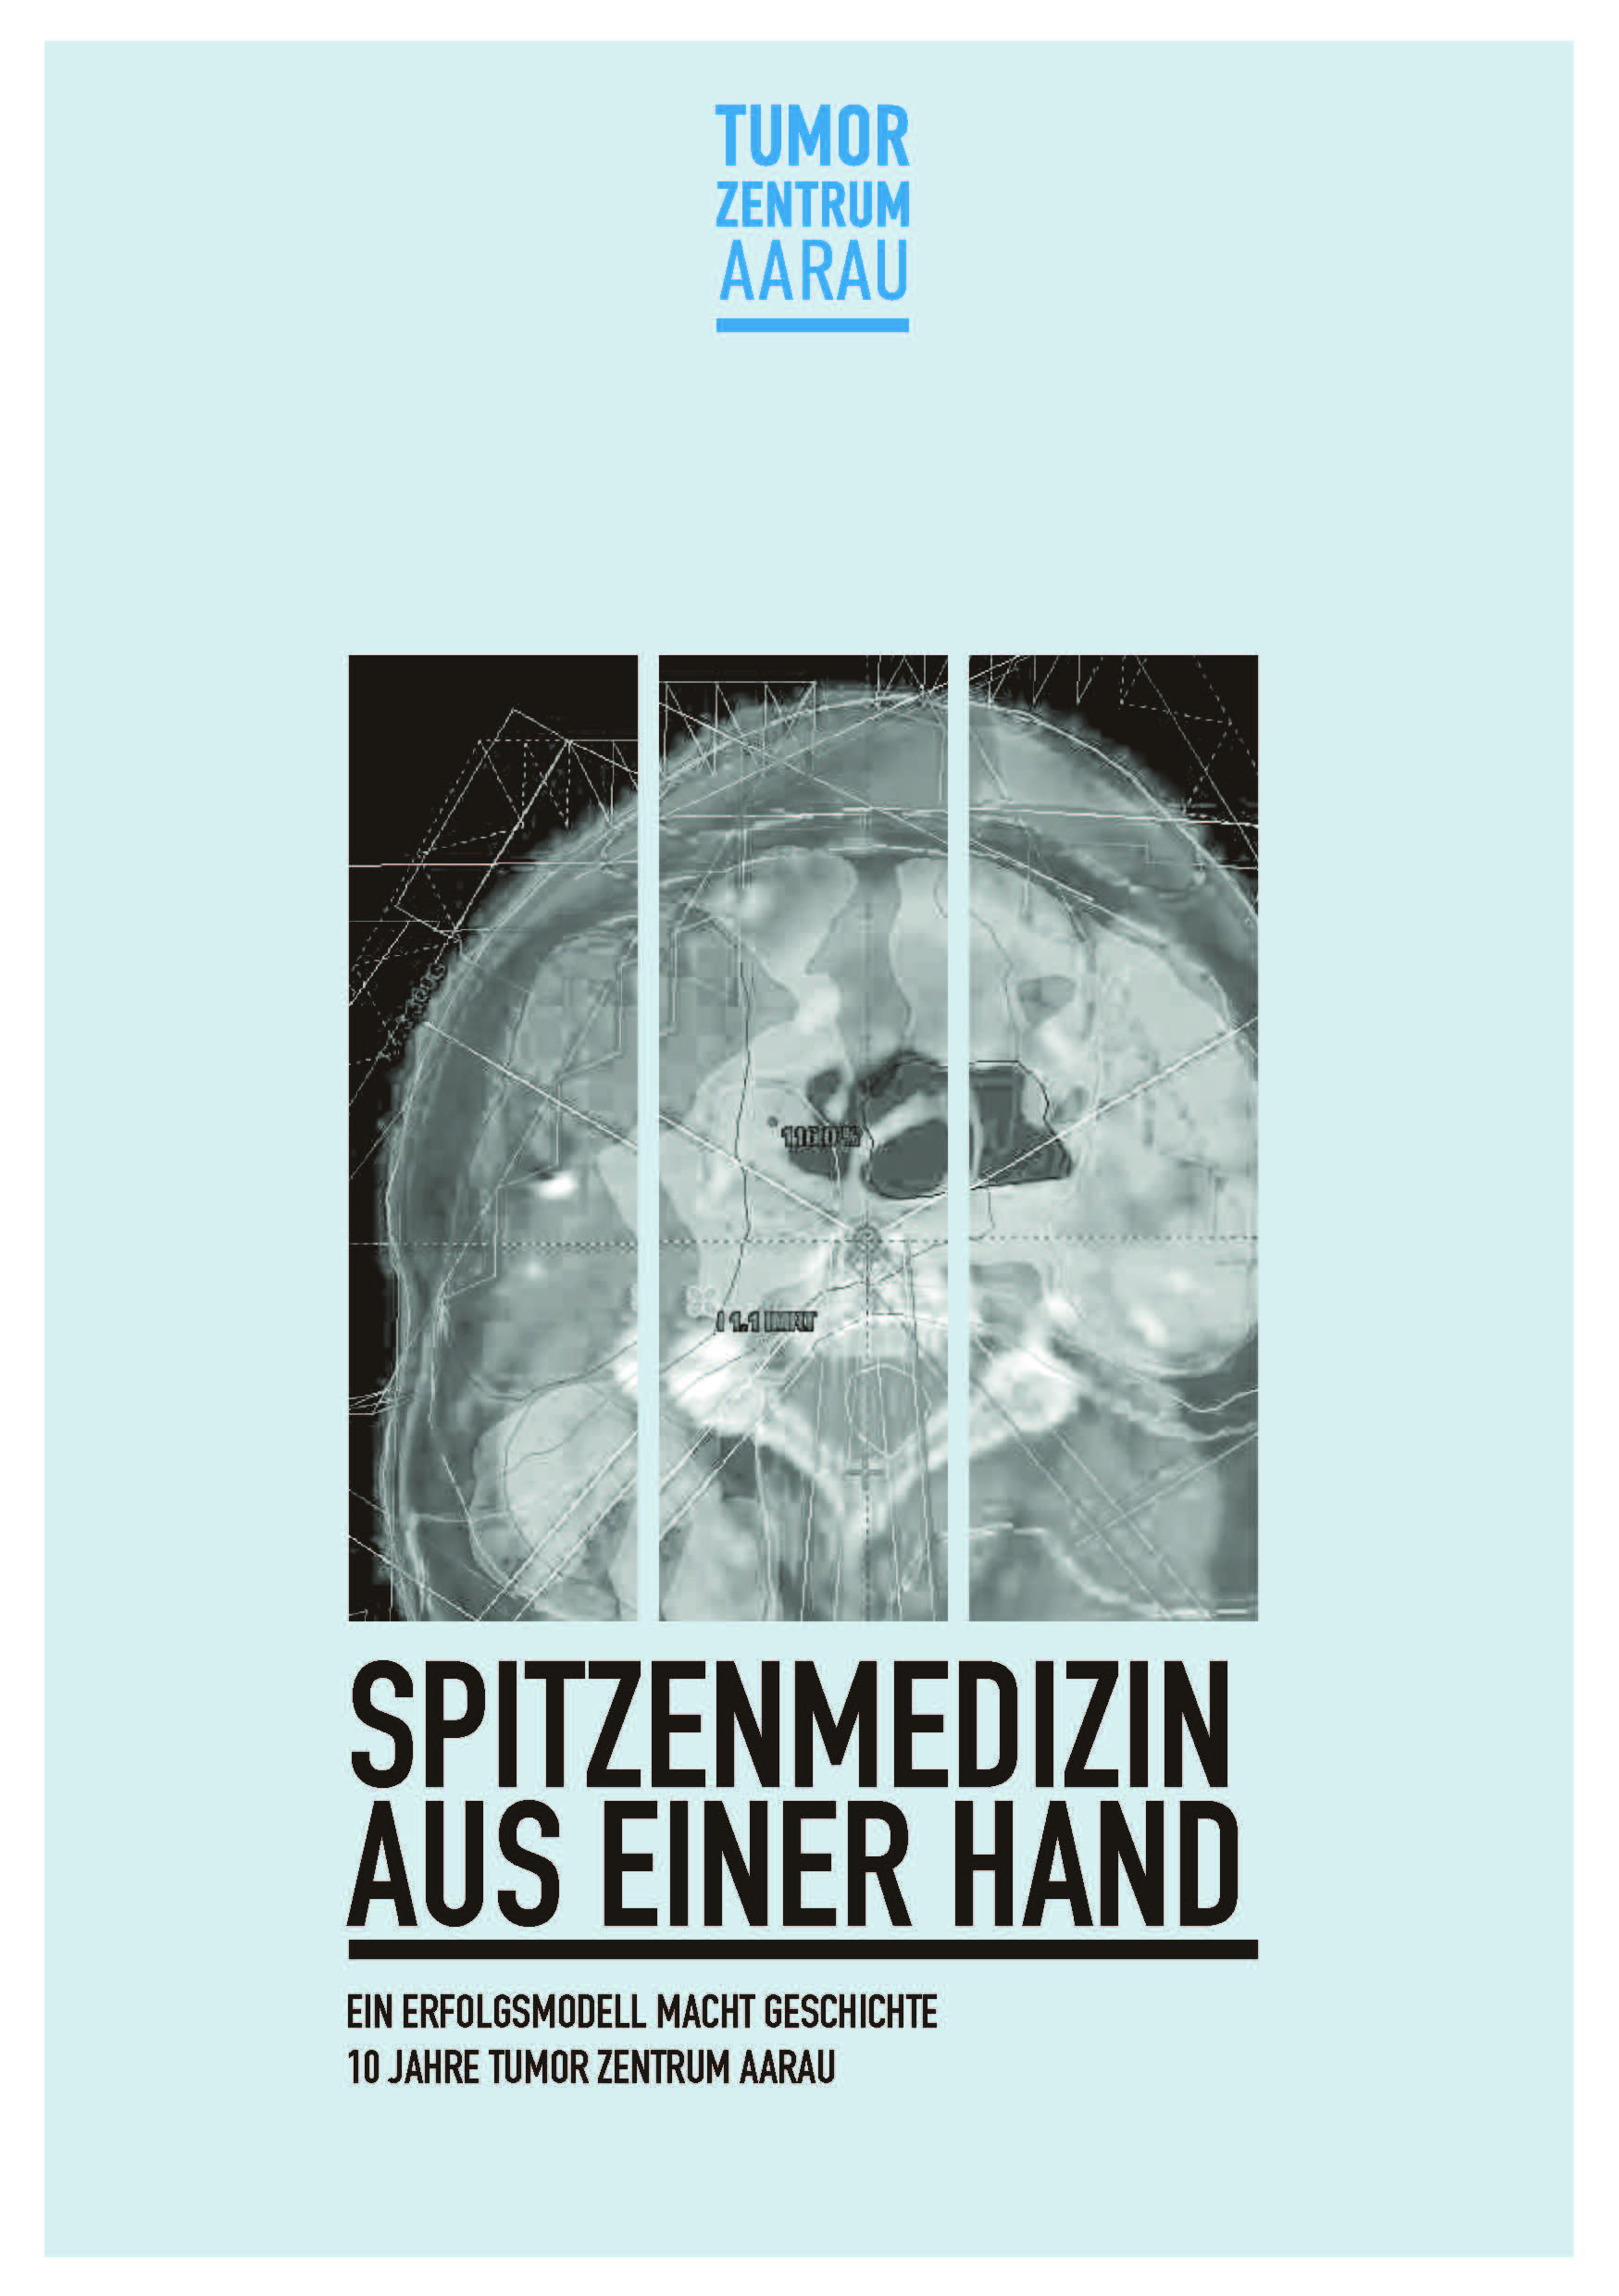 Textredaktion Jubiläumsbroschüre I Tumor Zentrum Aarau